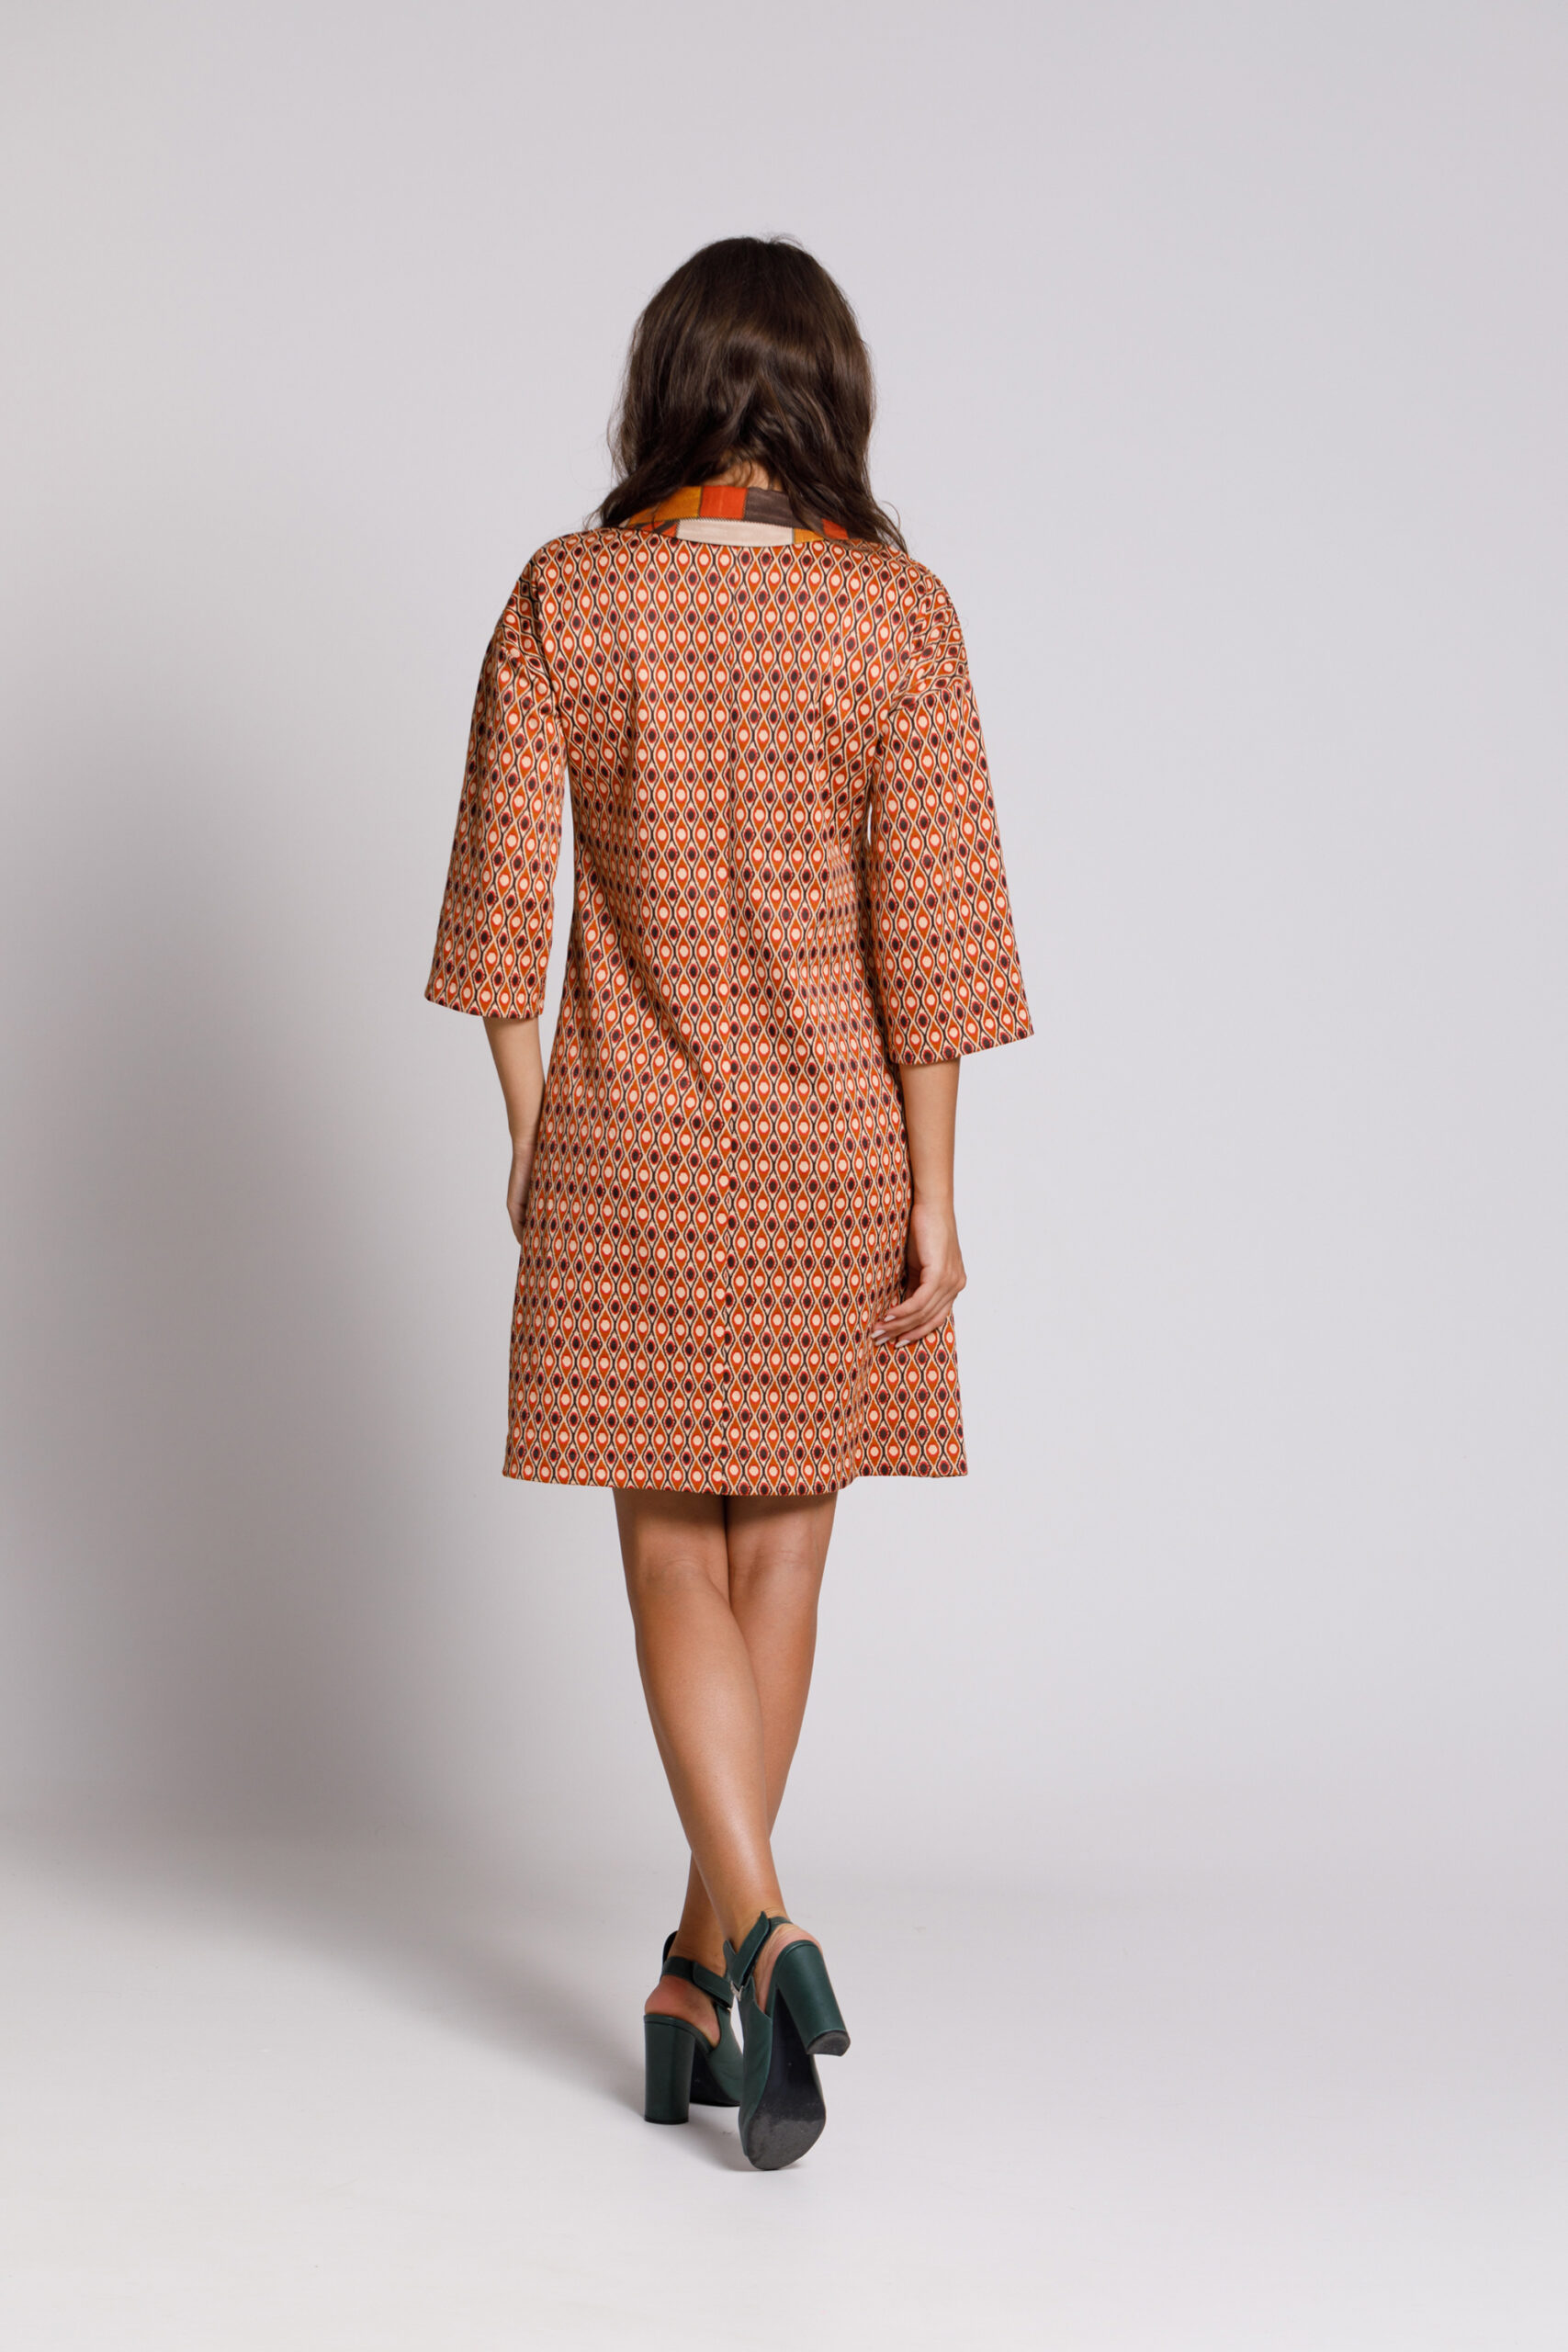 SAVA casual midi dress with geometric print. Natural fabrics, original design, handmade embroidery